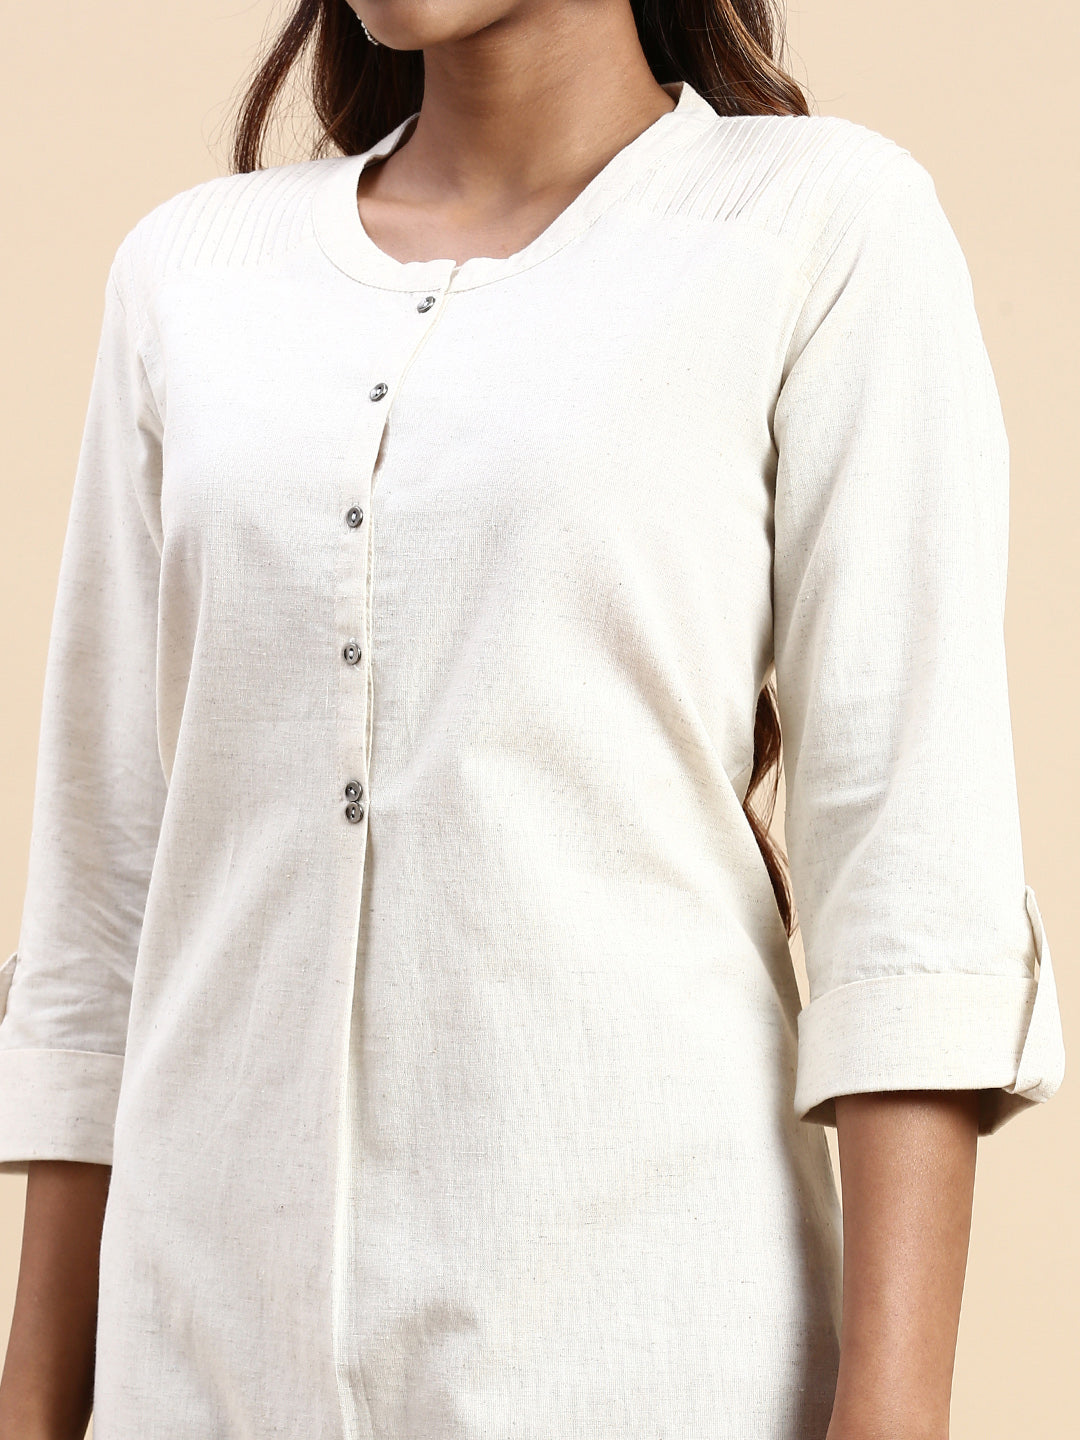 ASHWATH Women's White Cotton Rayon Blend Plain Kurti/Kurta and Pant Set  (XX-Large), White, 2XL: Buy Online at Best Price in UAE - Amazon.ae